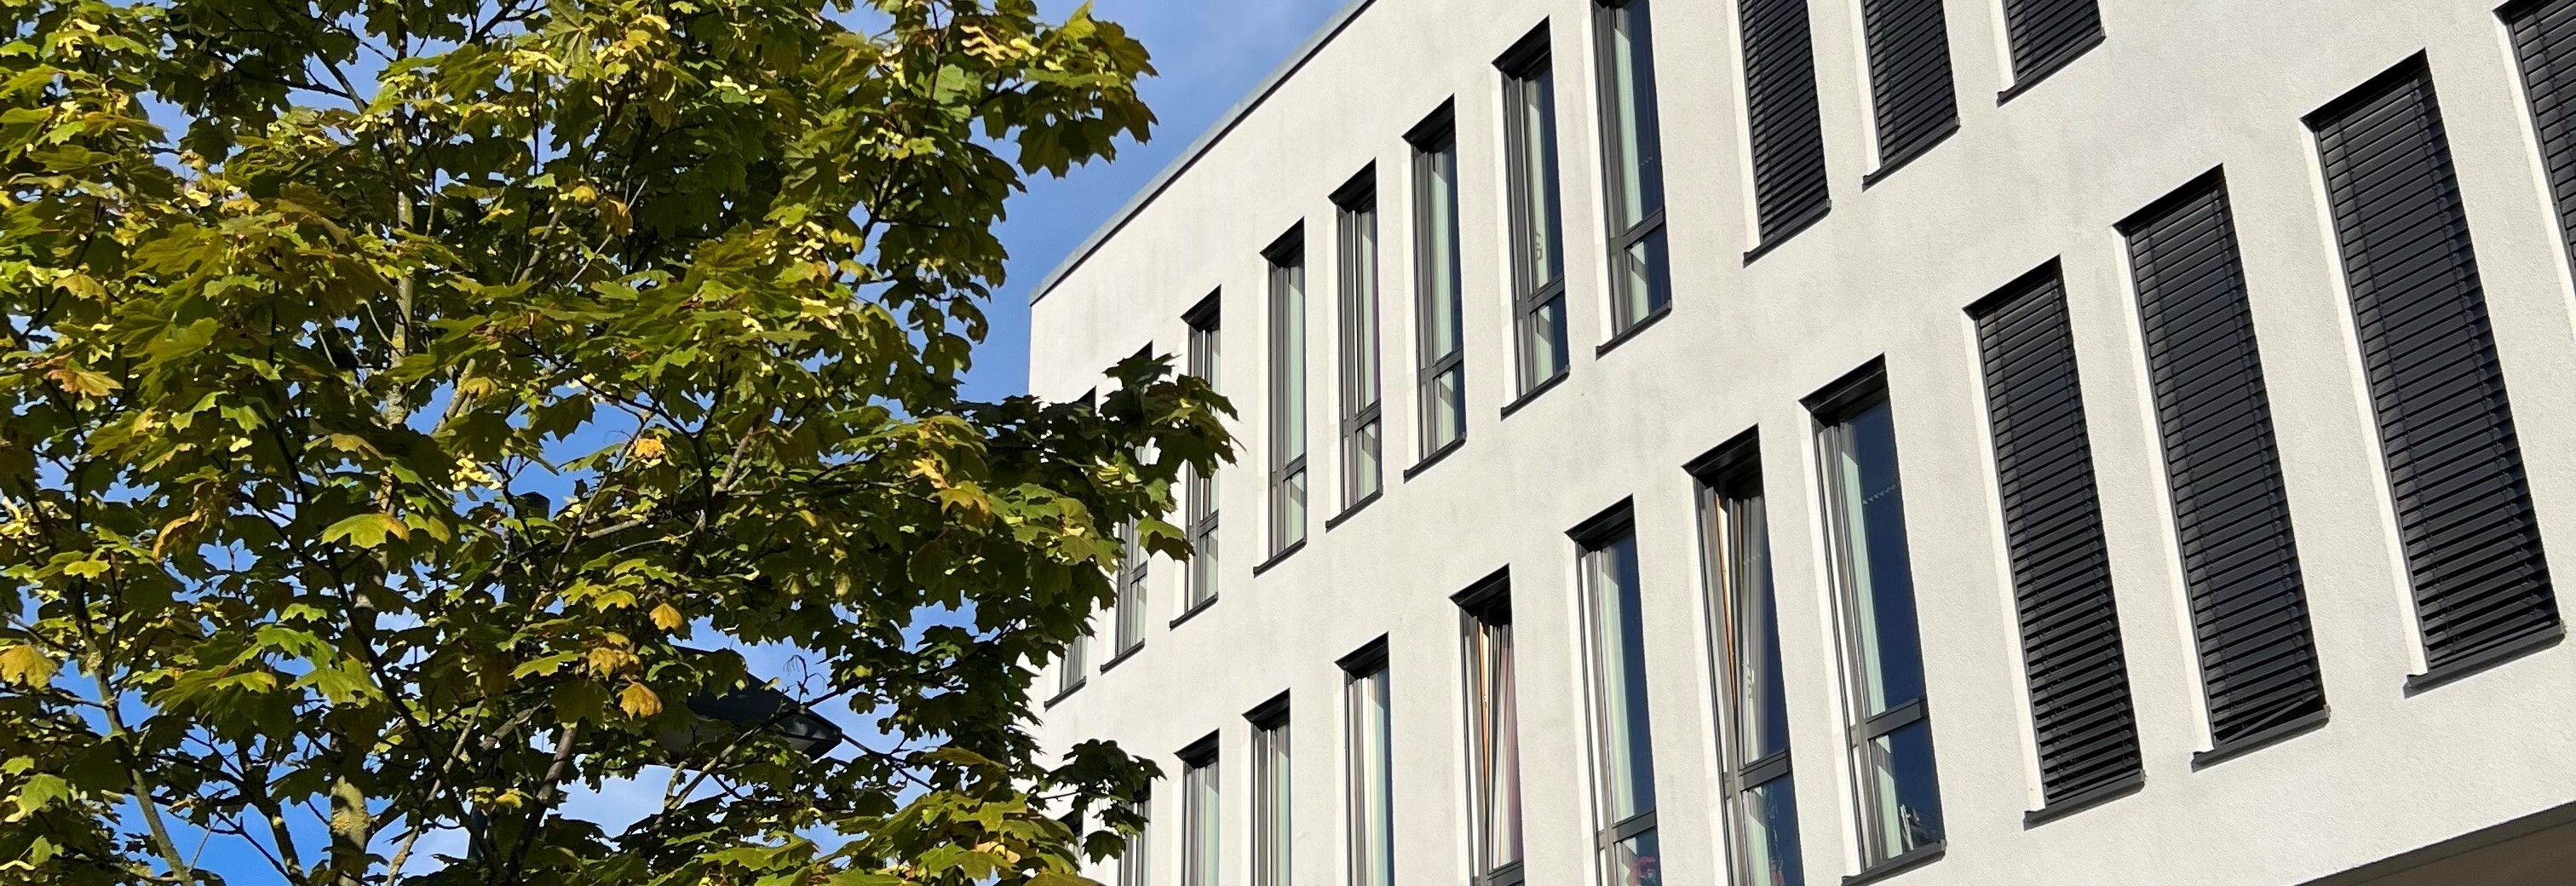 Moderne Fassade der Musikschule Hansestadt Lüneburg, umgeben von grünen Bäumen